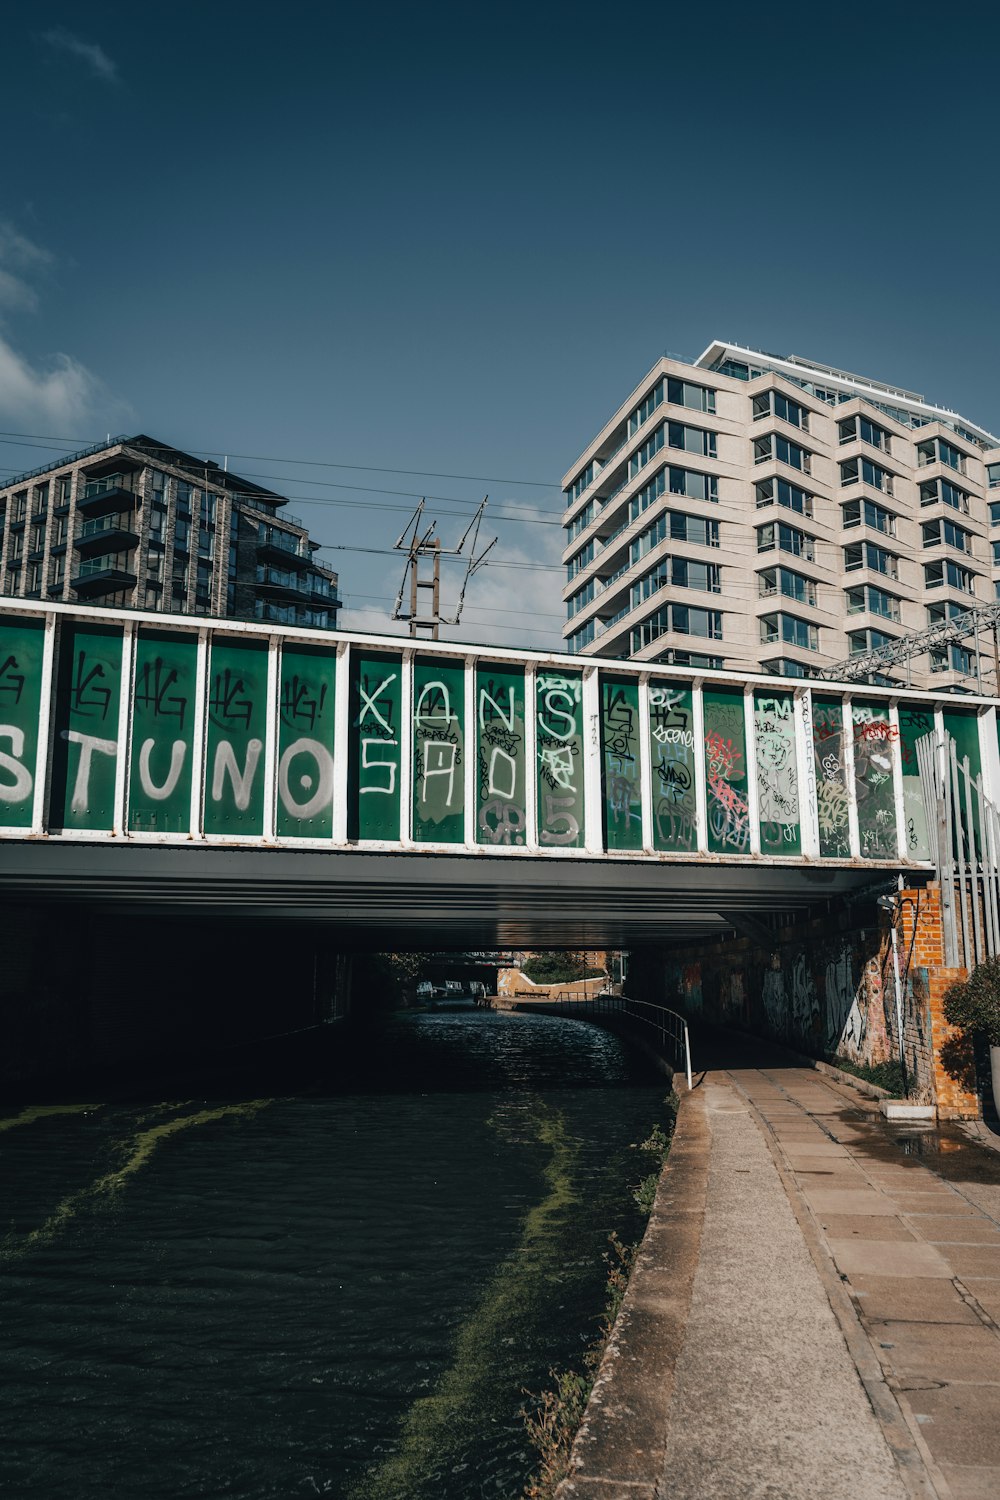 a bridge that has graffiti on the side of it